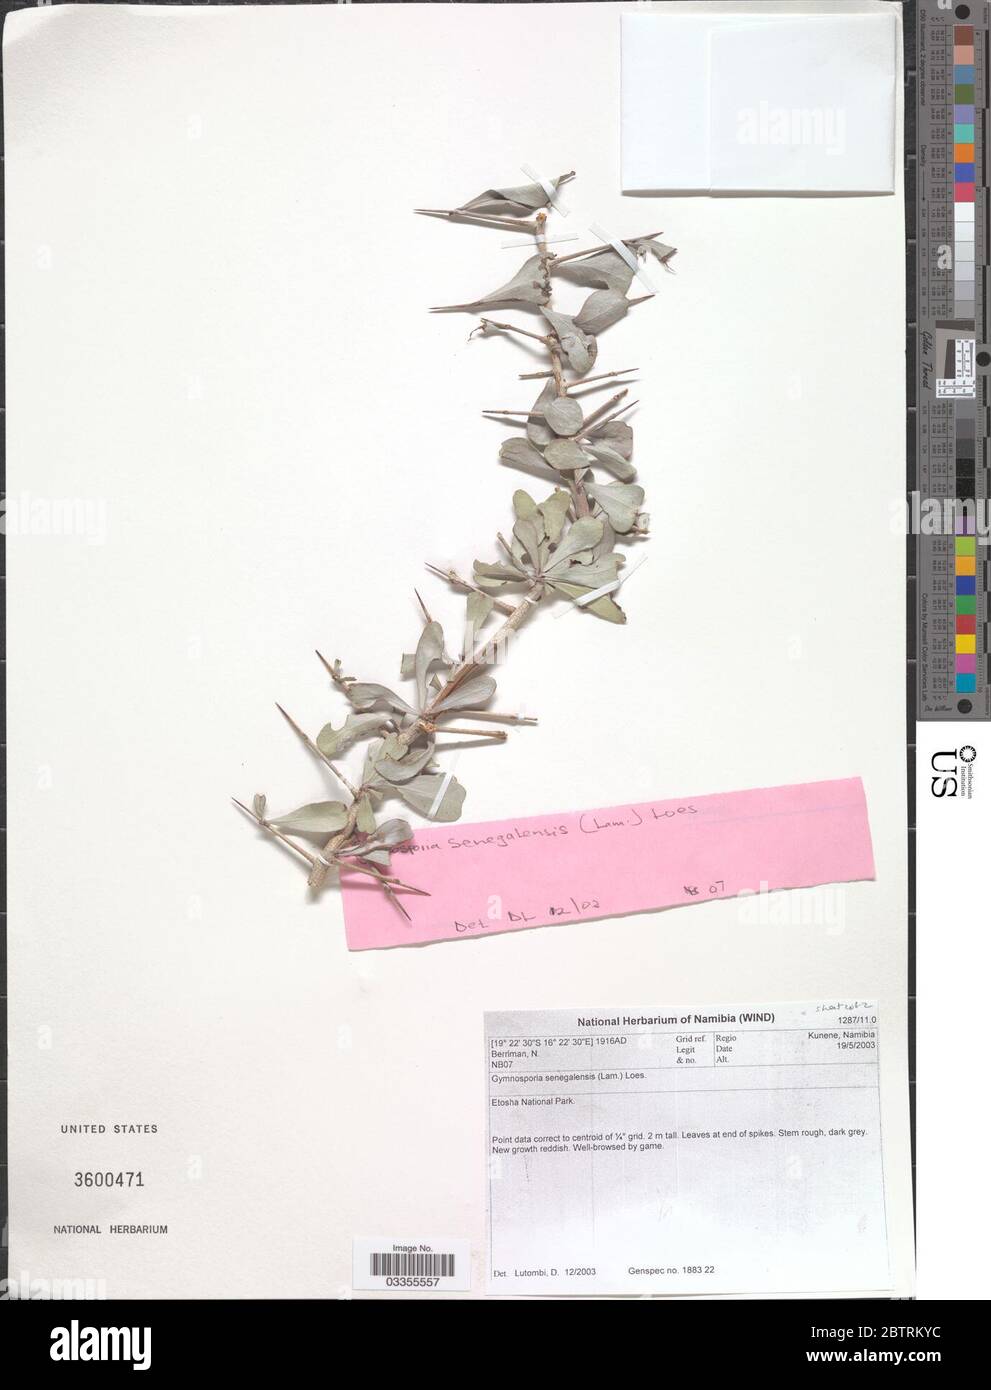 Gymnosporia senegalensis Lam Loes. Stock Photo